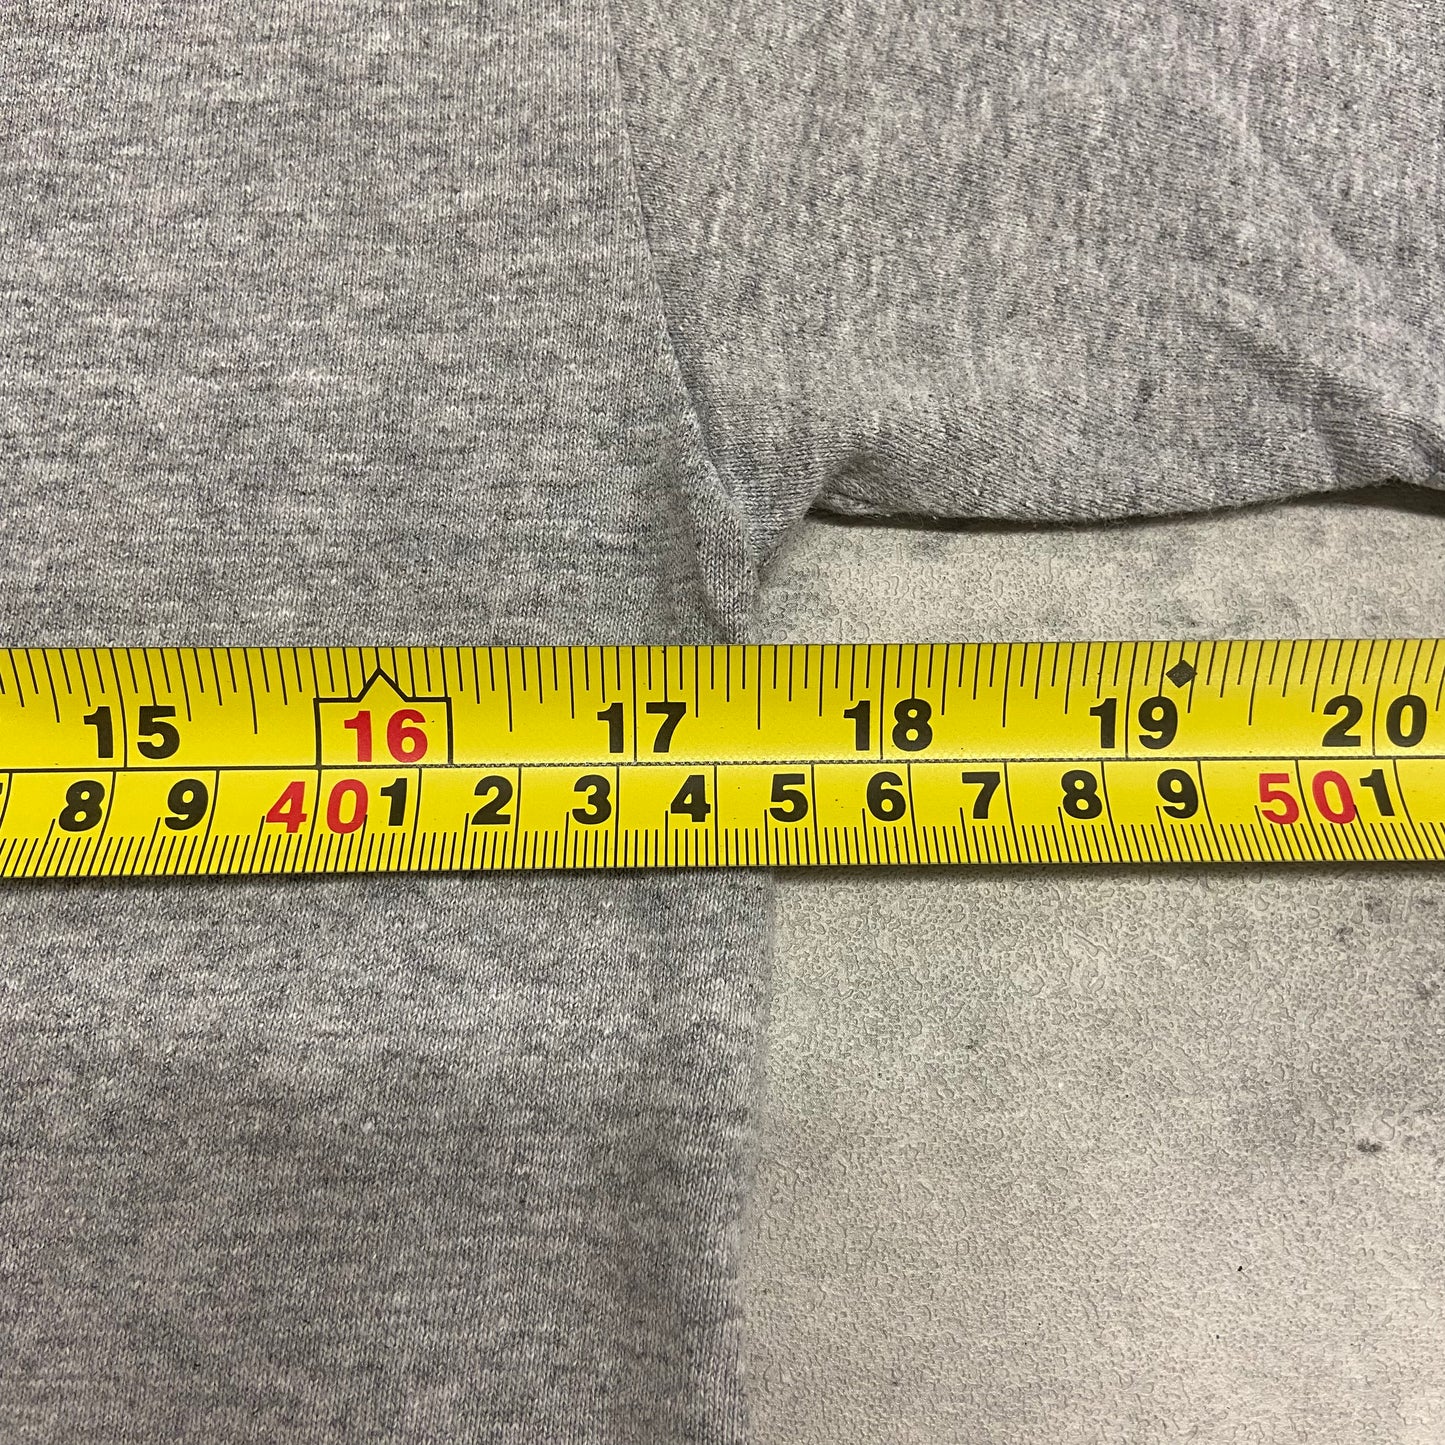 Y2K West Virginia University T-Shirt size S